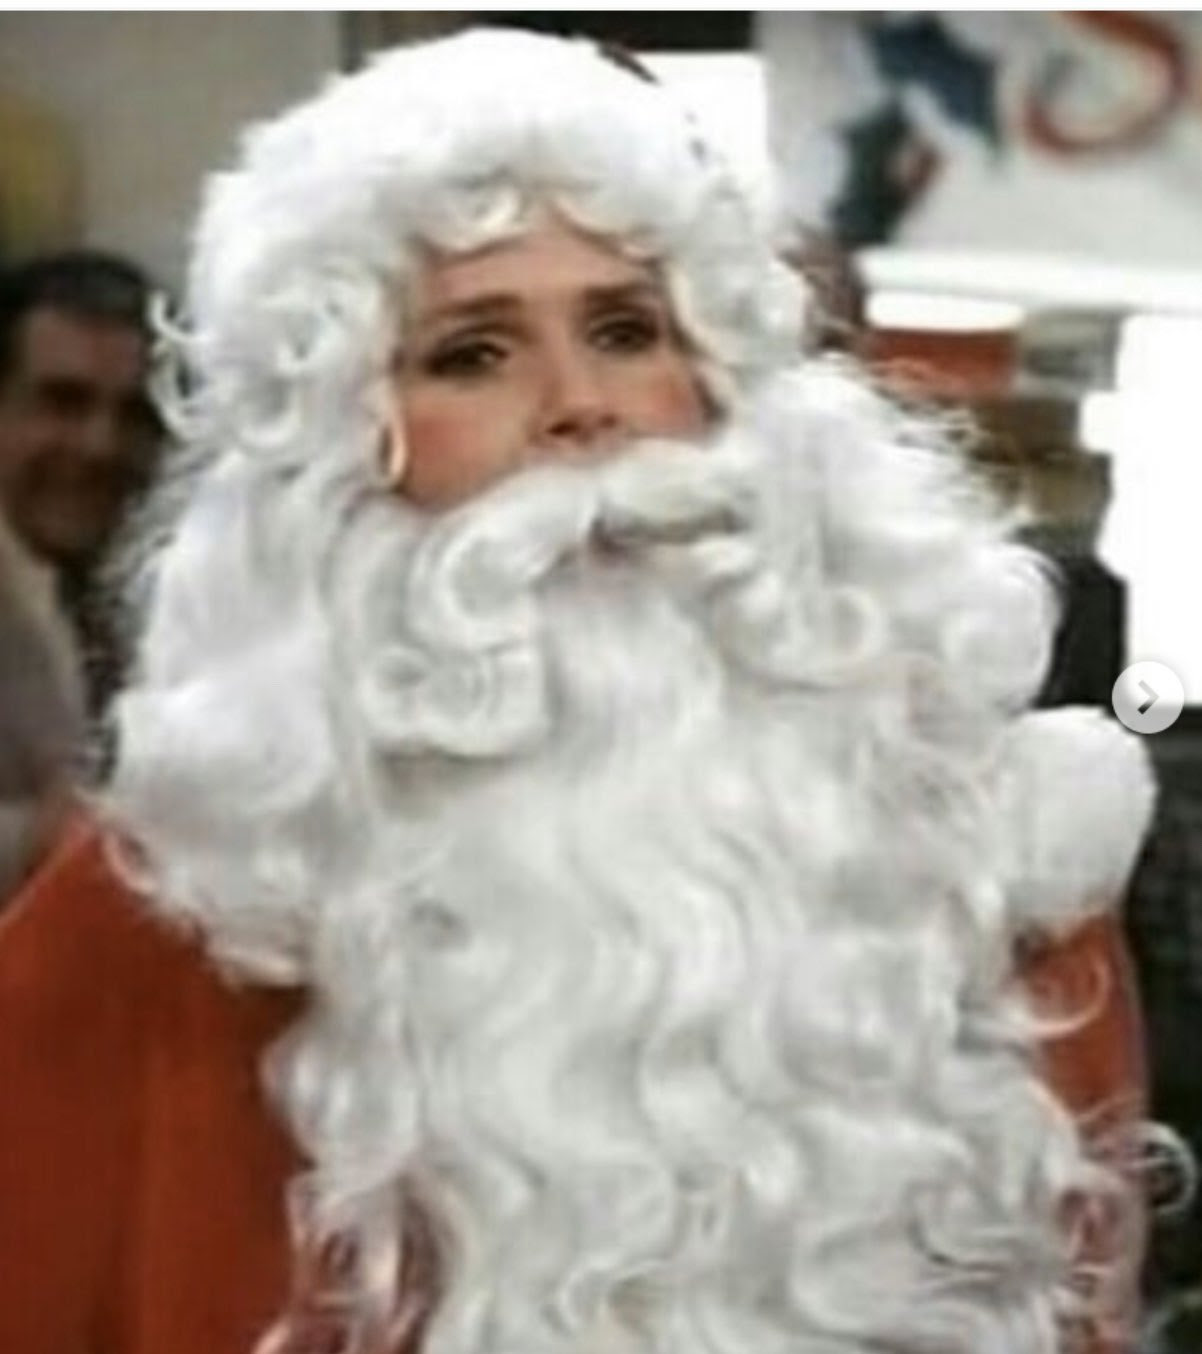 Sharon Gless on Twitter: "Merry Christmas, everybody!!! Ho ho hi! https://t.co/vrfrahu1lz" / Twitter